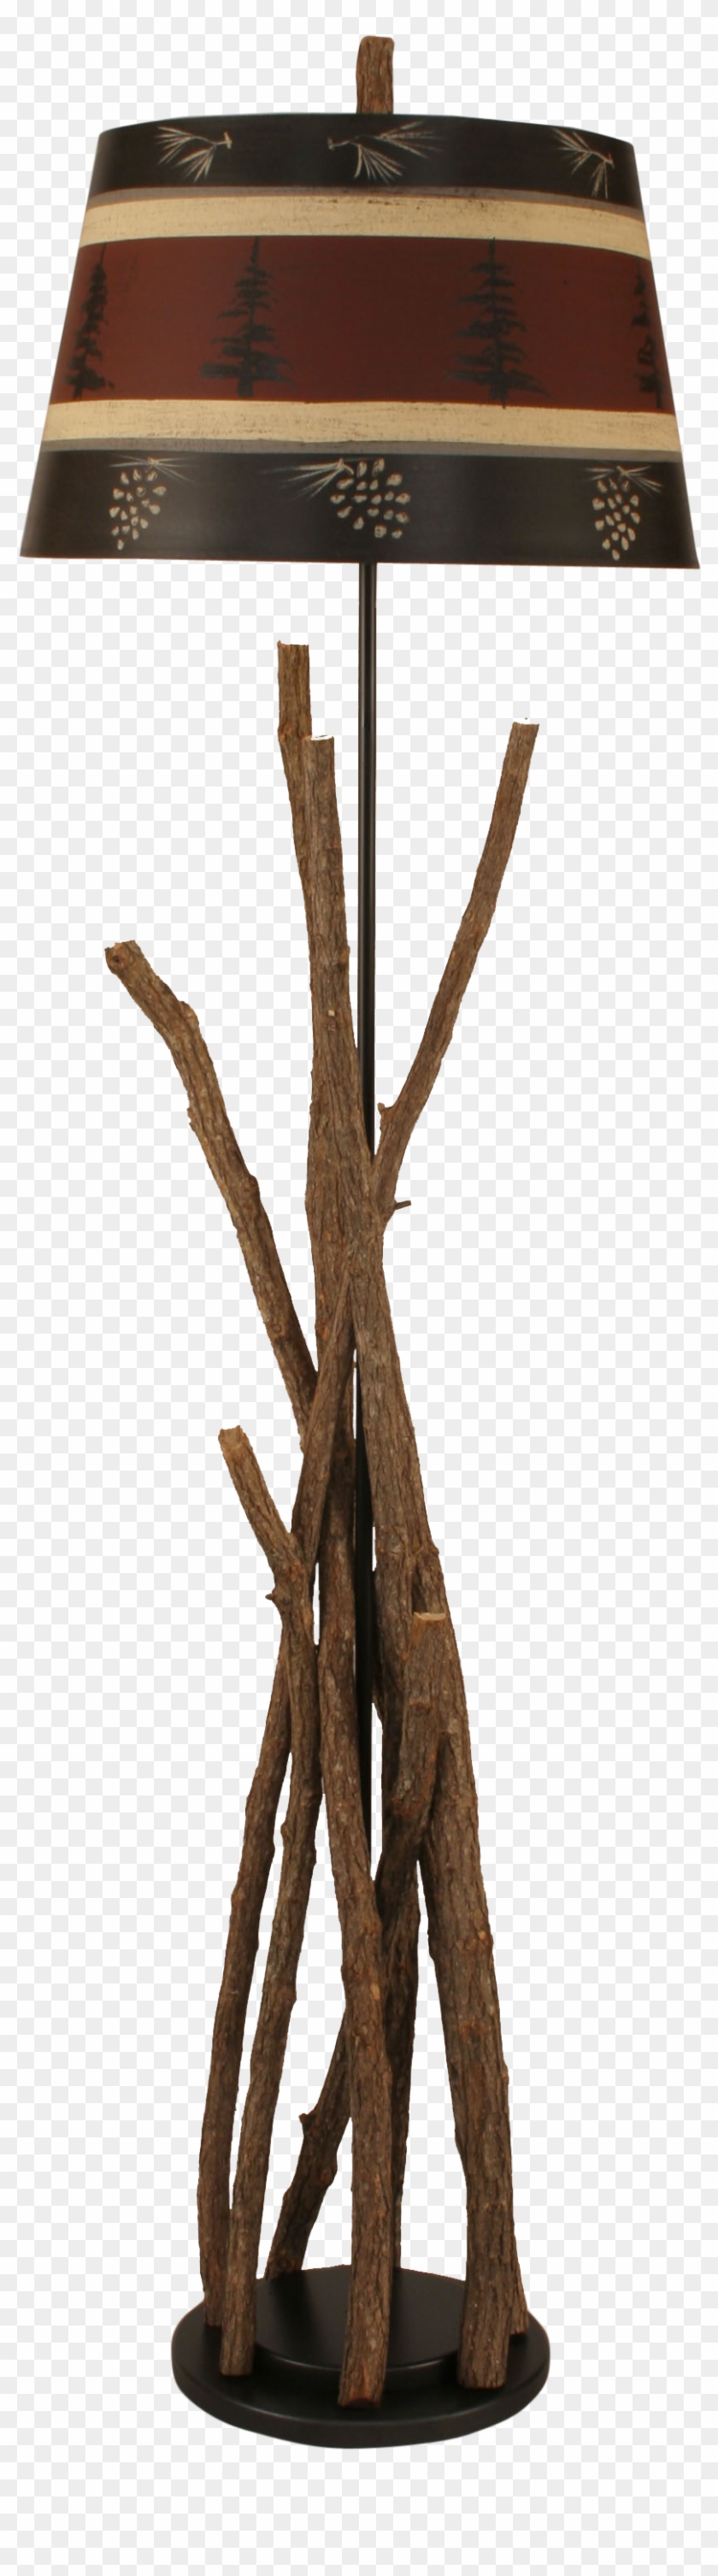 Bundle Of Sticks Png - Driftwood Clipart #2656266